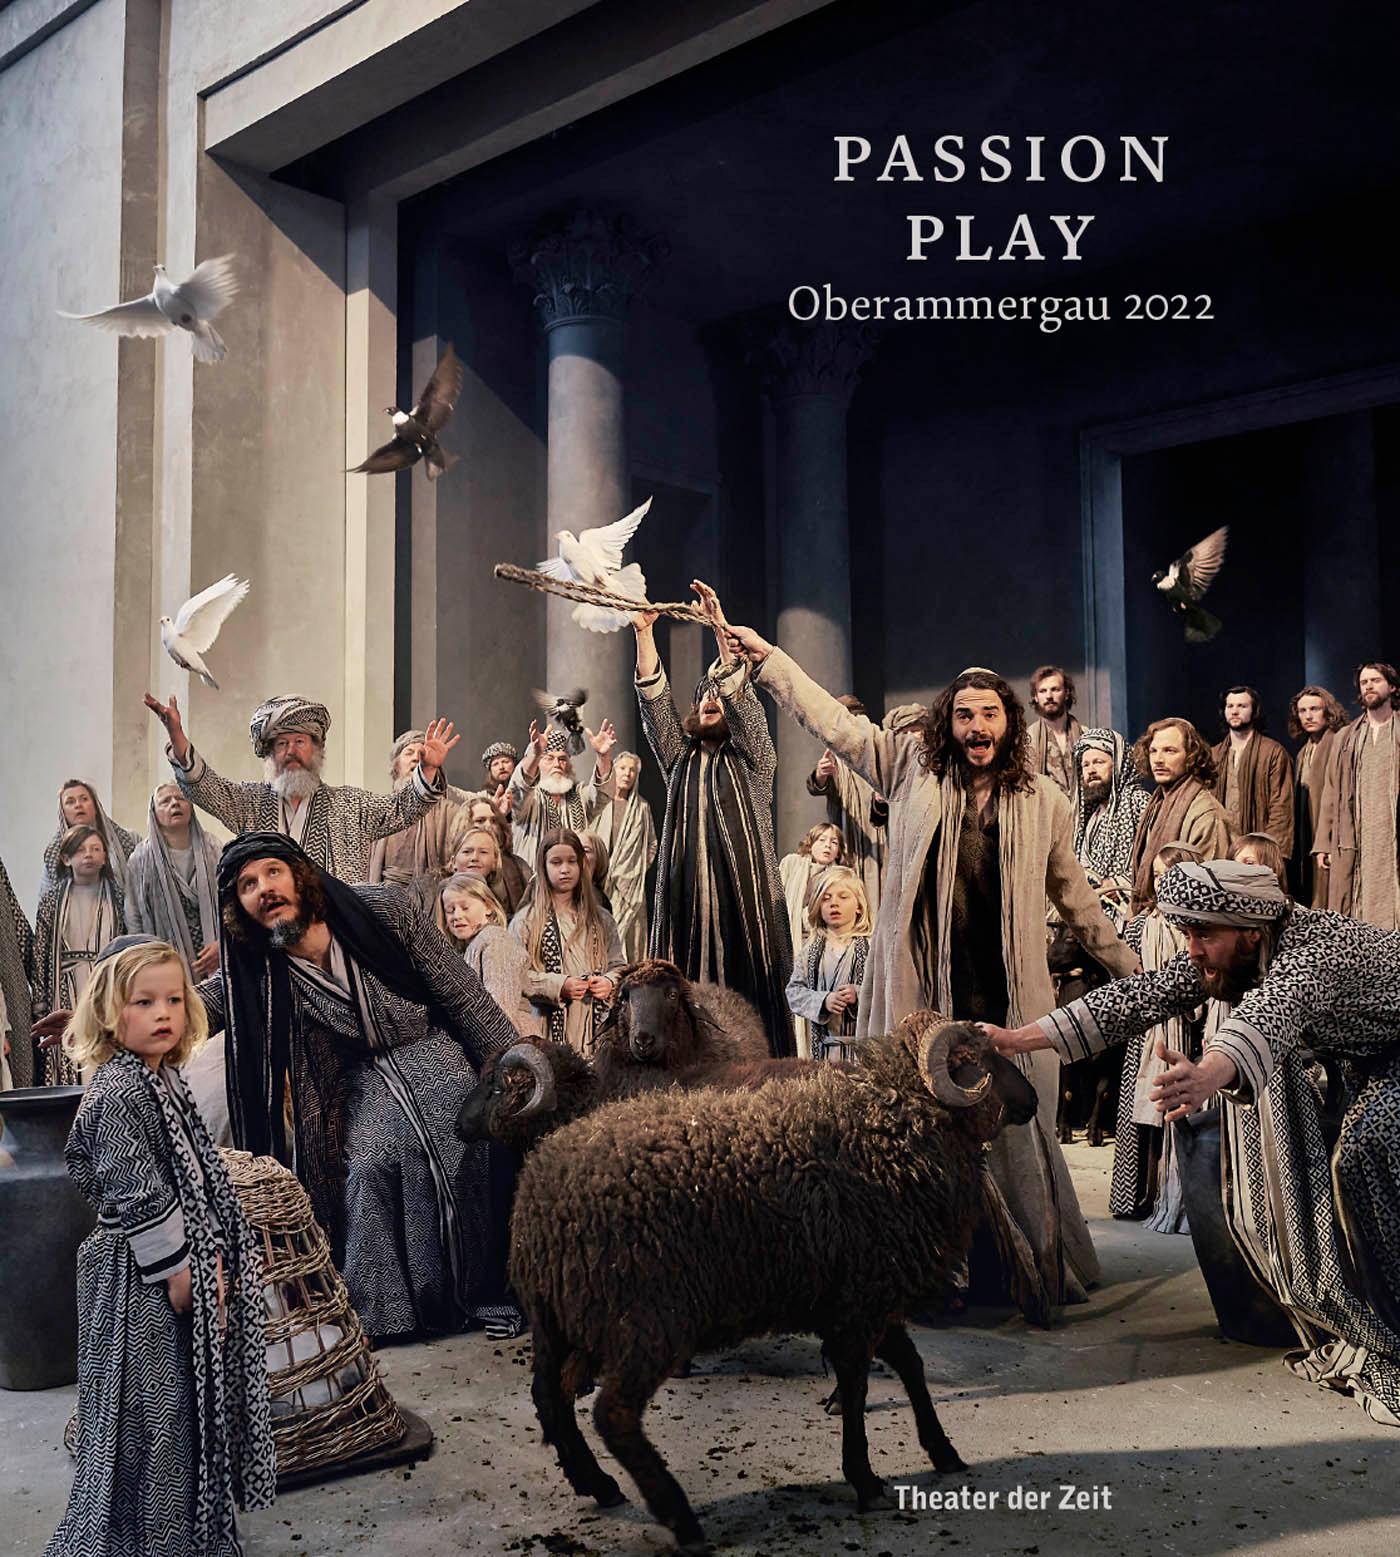 "Passion Play Oberammergau 2022"